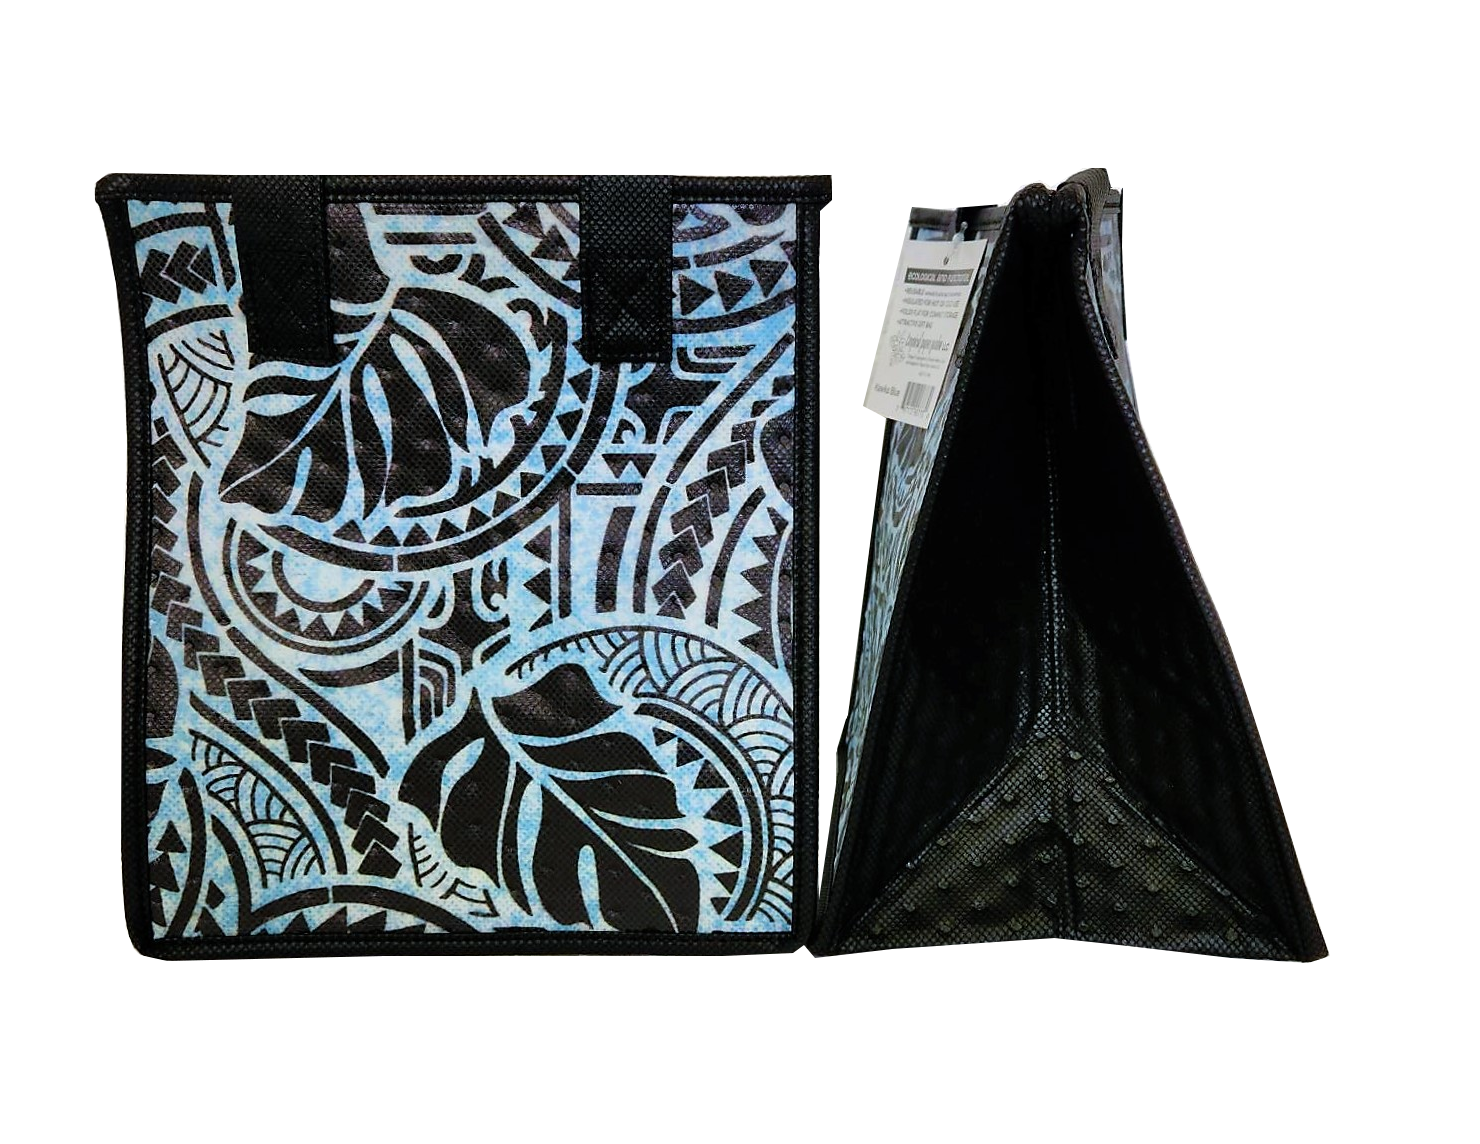 Tropical Paper Garden - Insulated Small Bag - KAWIKA BLUE